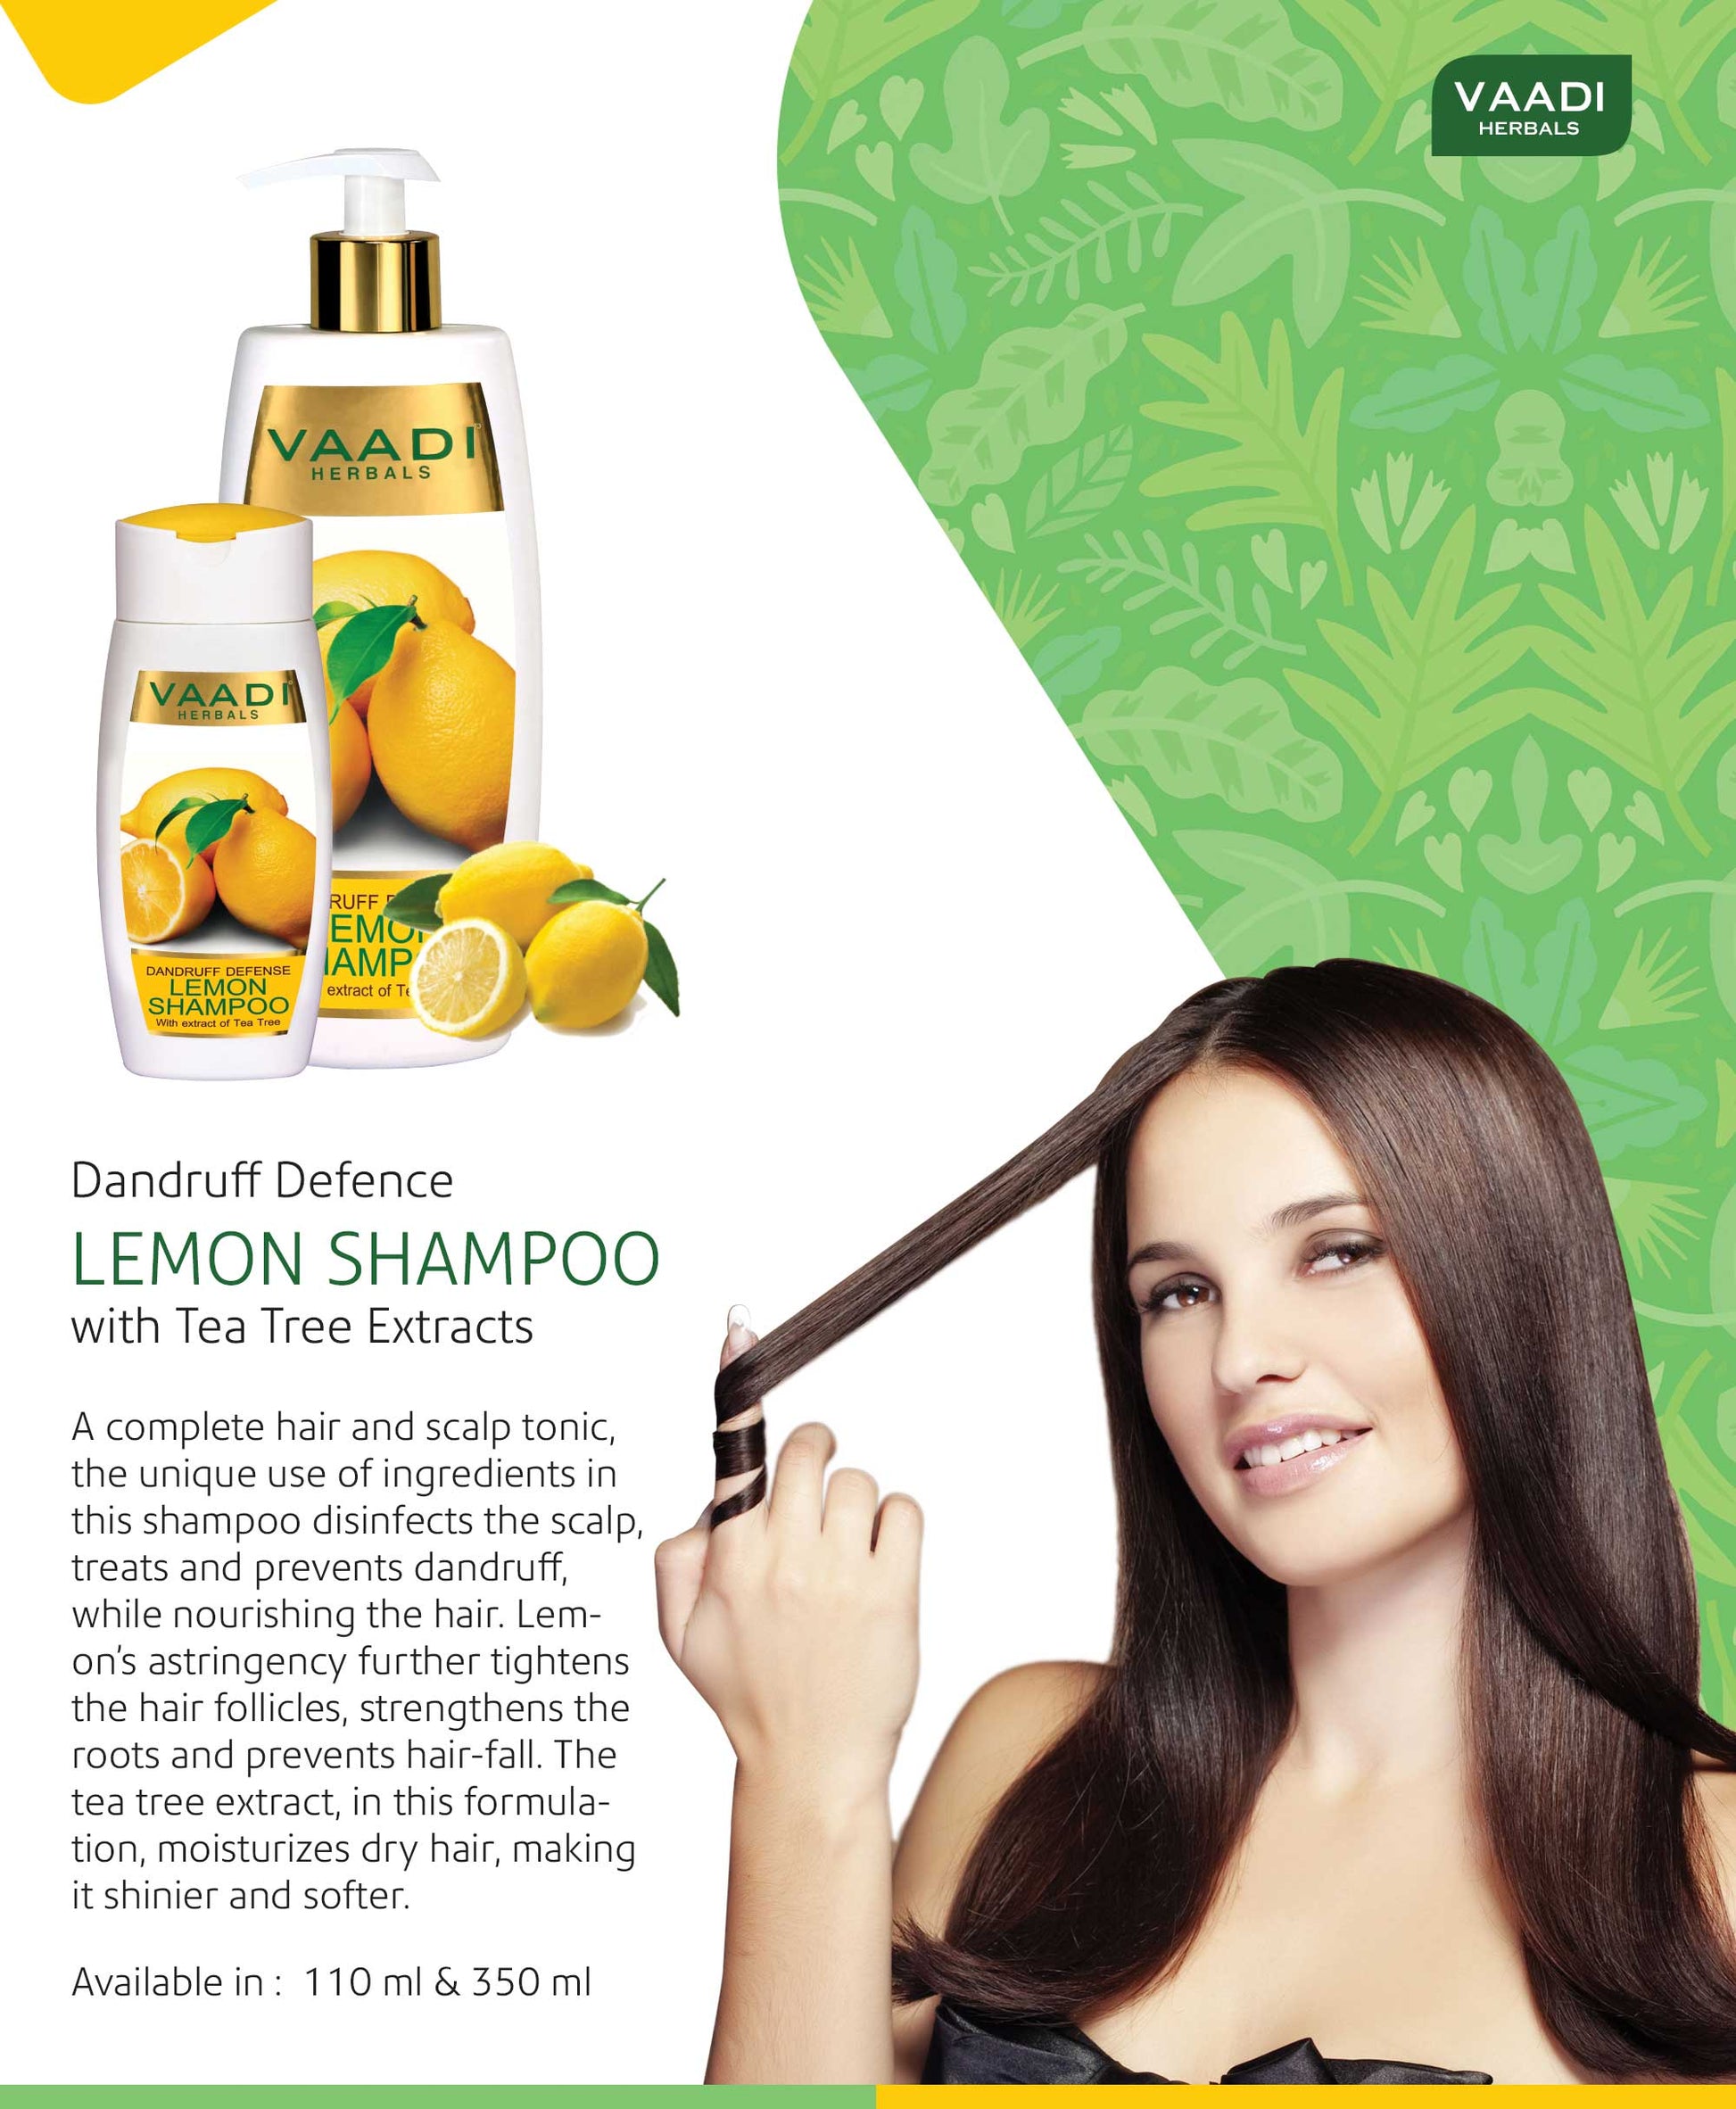 Dandruff Defense Organic Lemon Shampoo with Tea Tree Extract (110 m/ 4 fl oz)